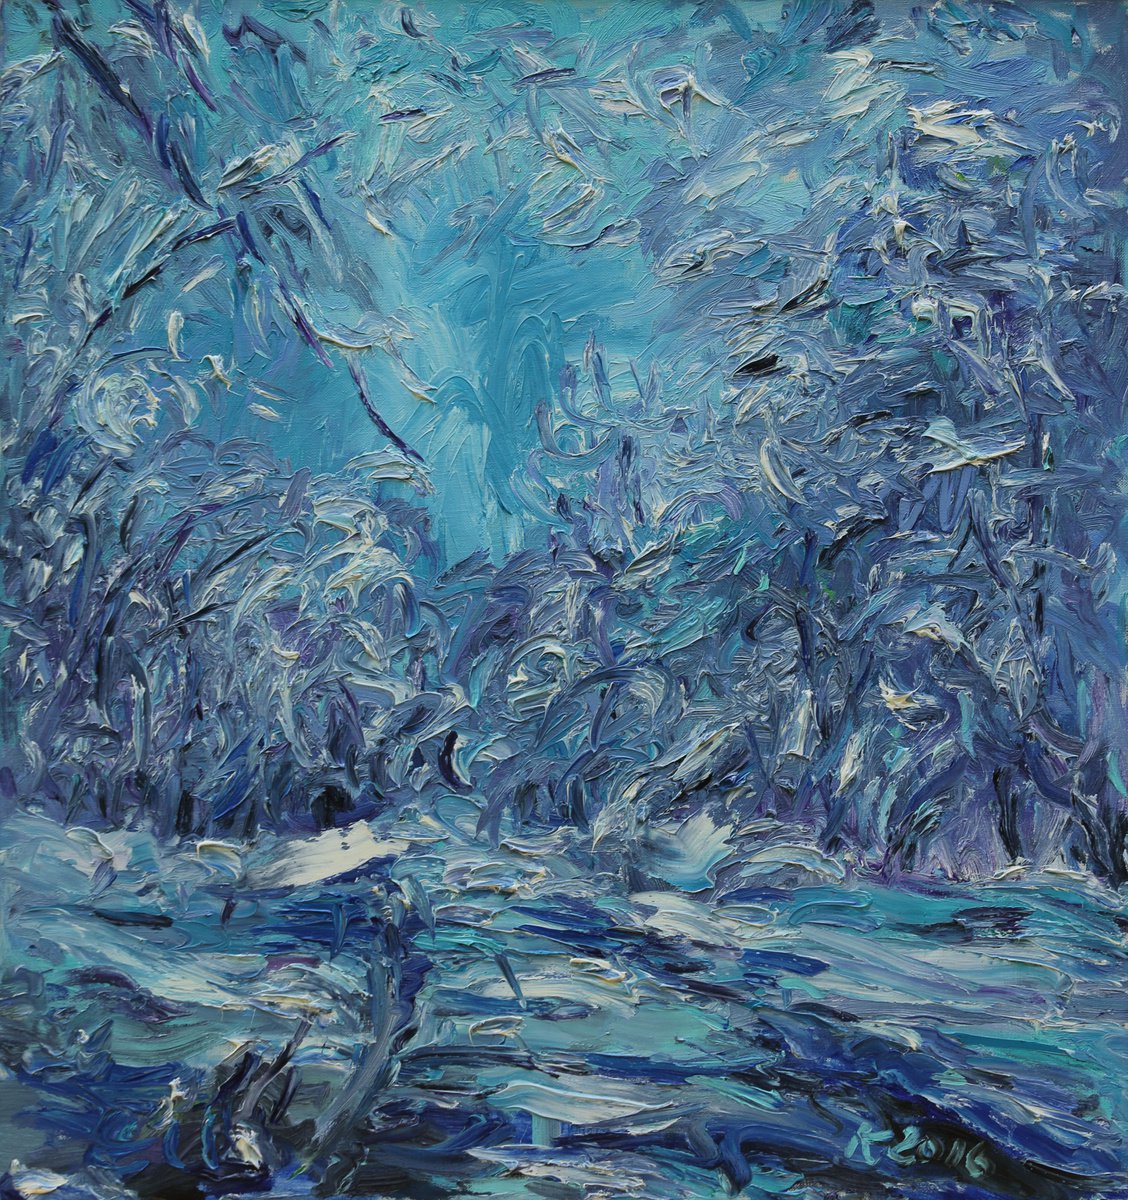 RELICT FOREST IN SAMUR. WINTER RHAPSODY - Landscape, original oil painting, winter, snow by Karakhan